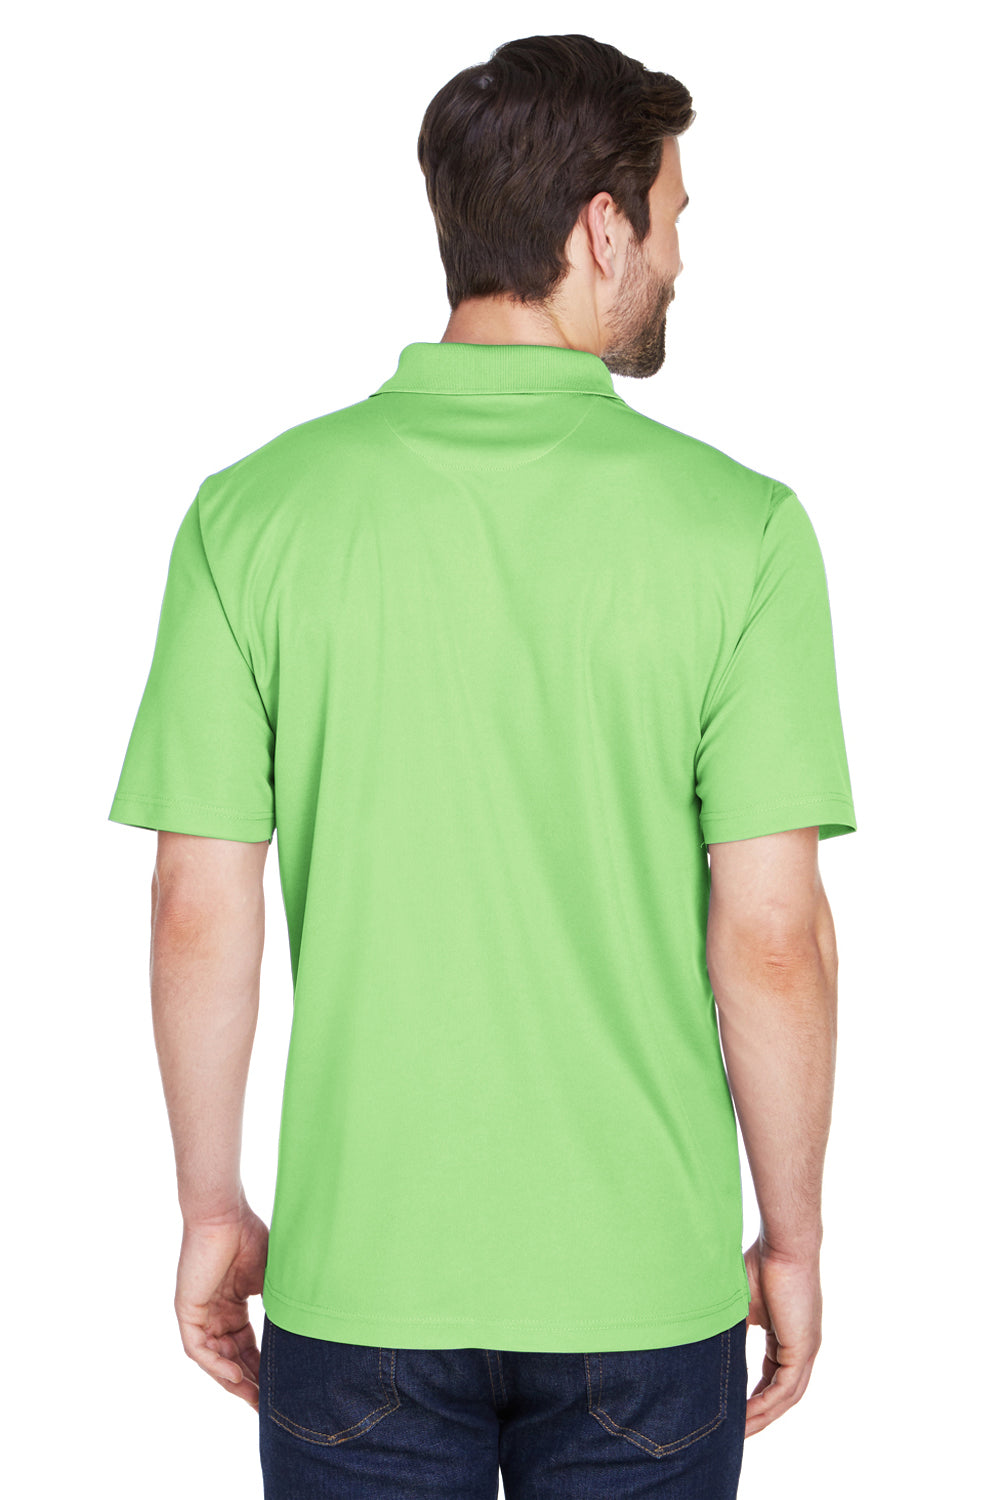 UltraClub 8210 Mens Cool & Dry Moisture Wicking Short Sleeve Polo Shirt Light Green Back